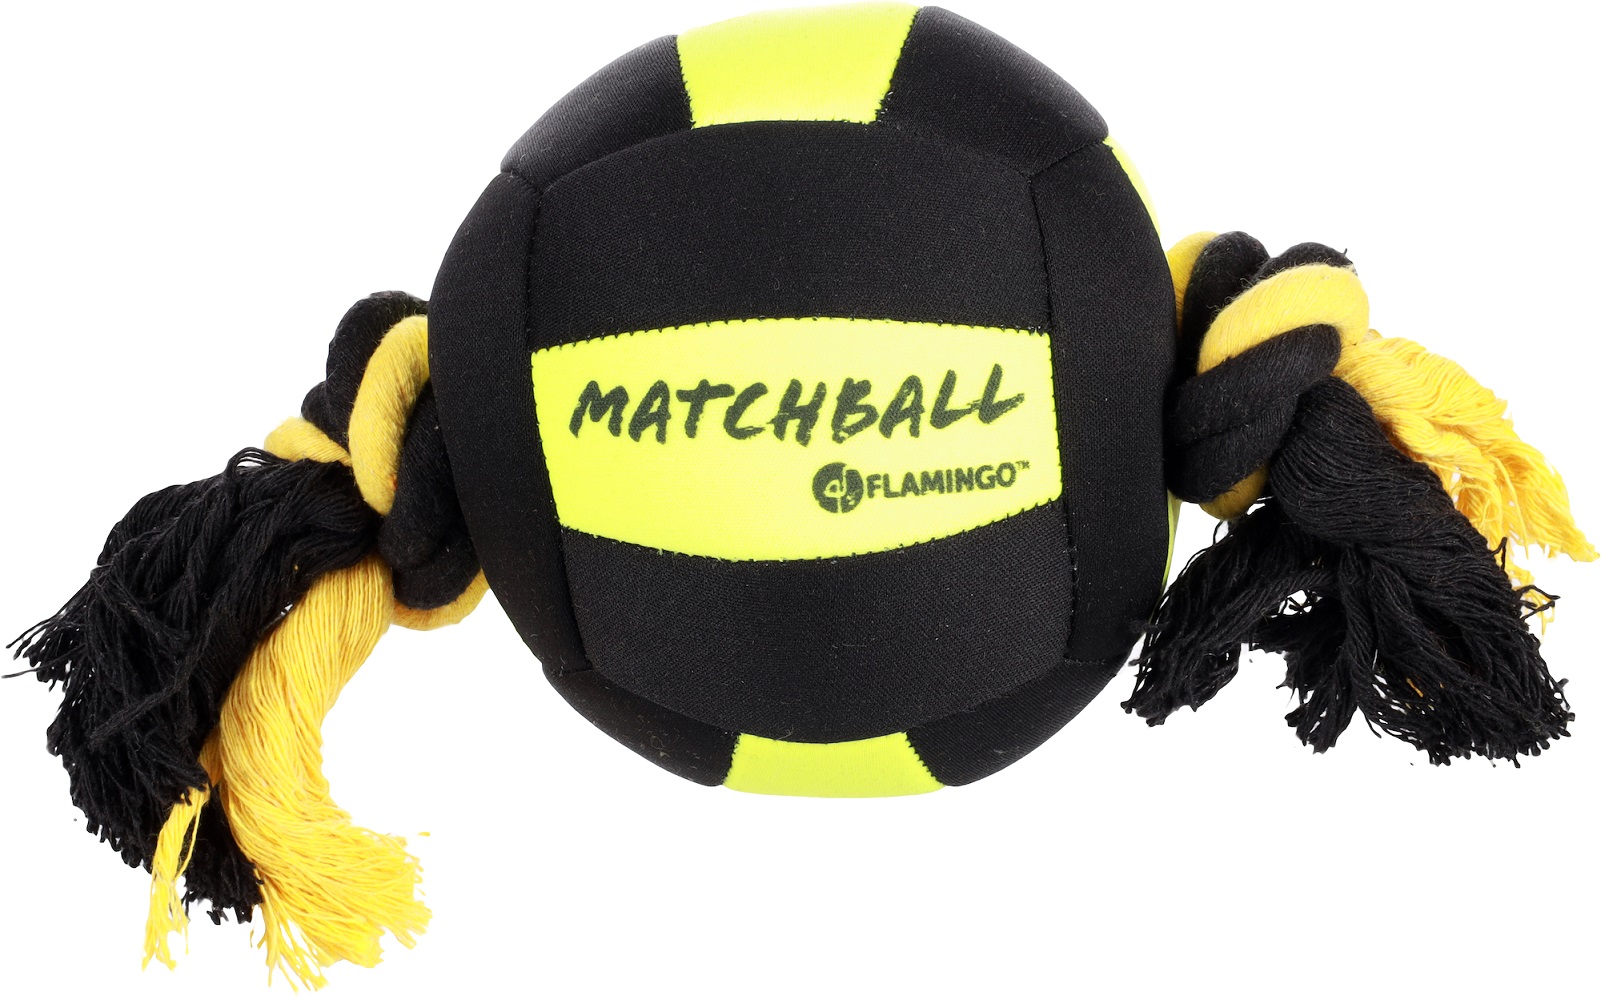 Flamingo Matchball míč s lanem 13 cm